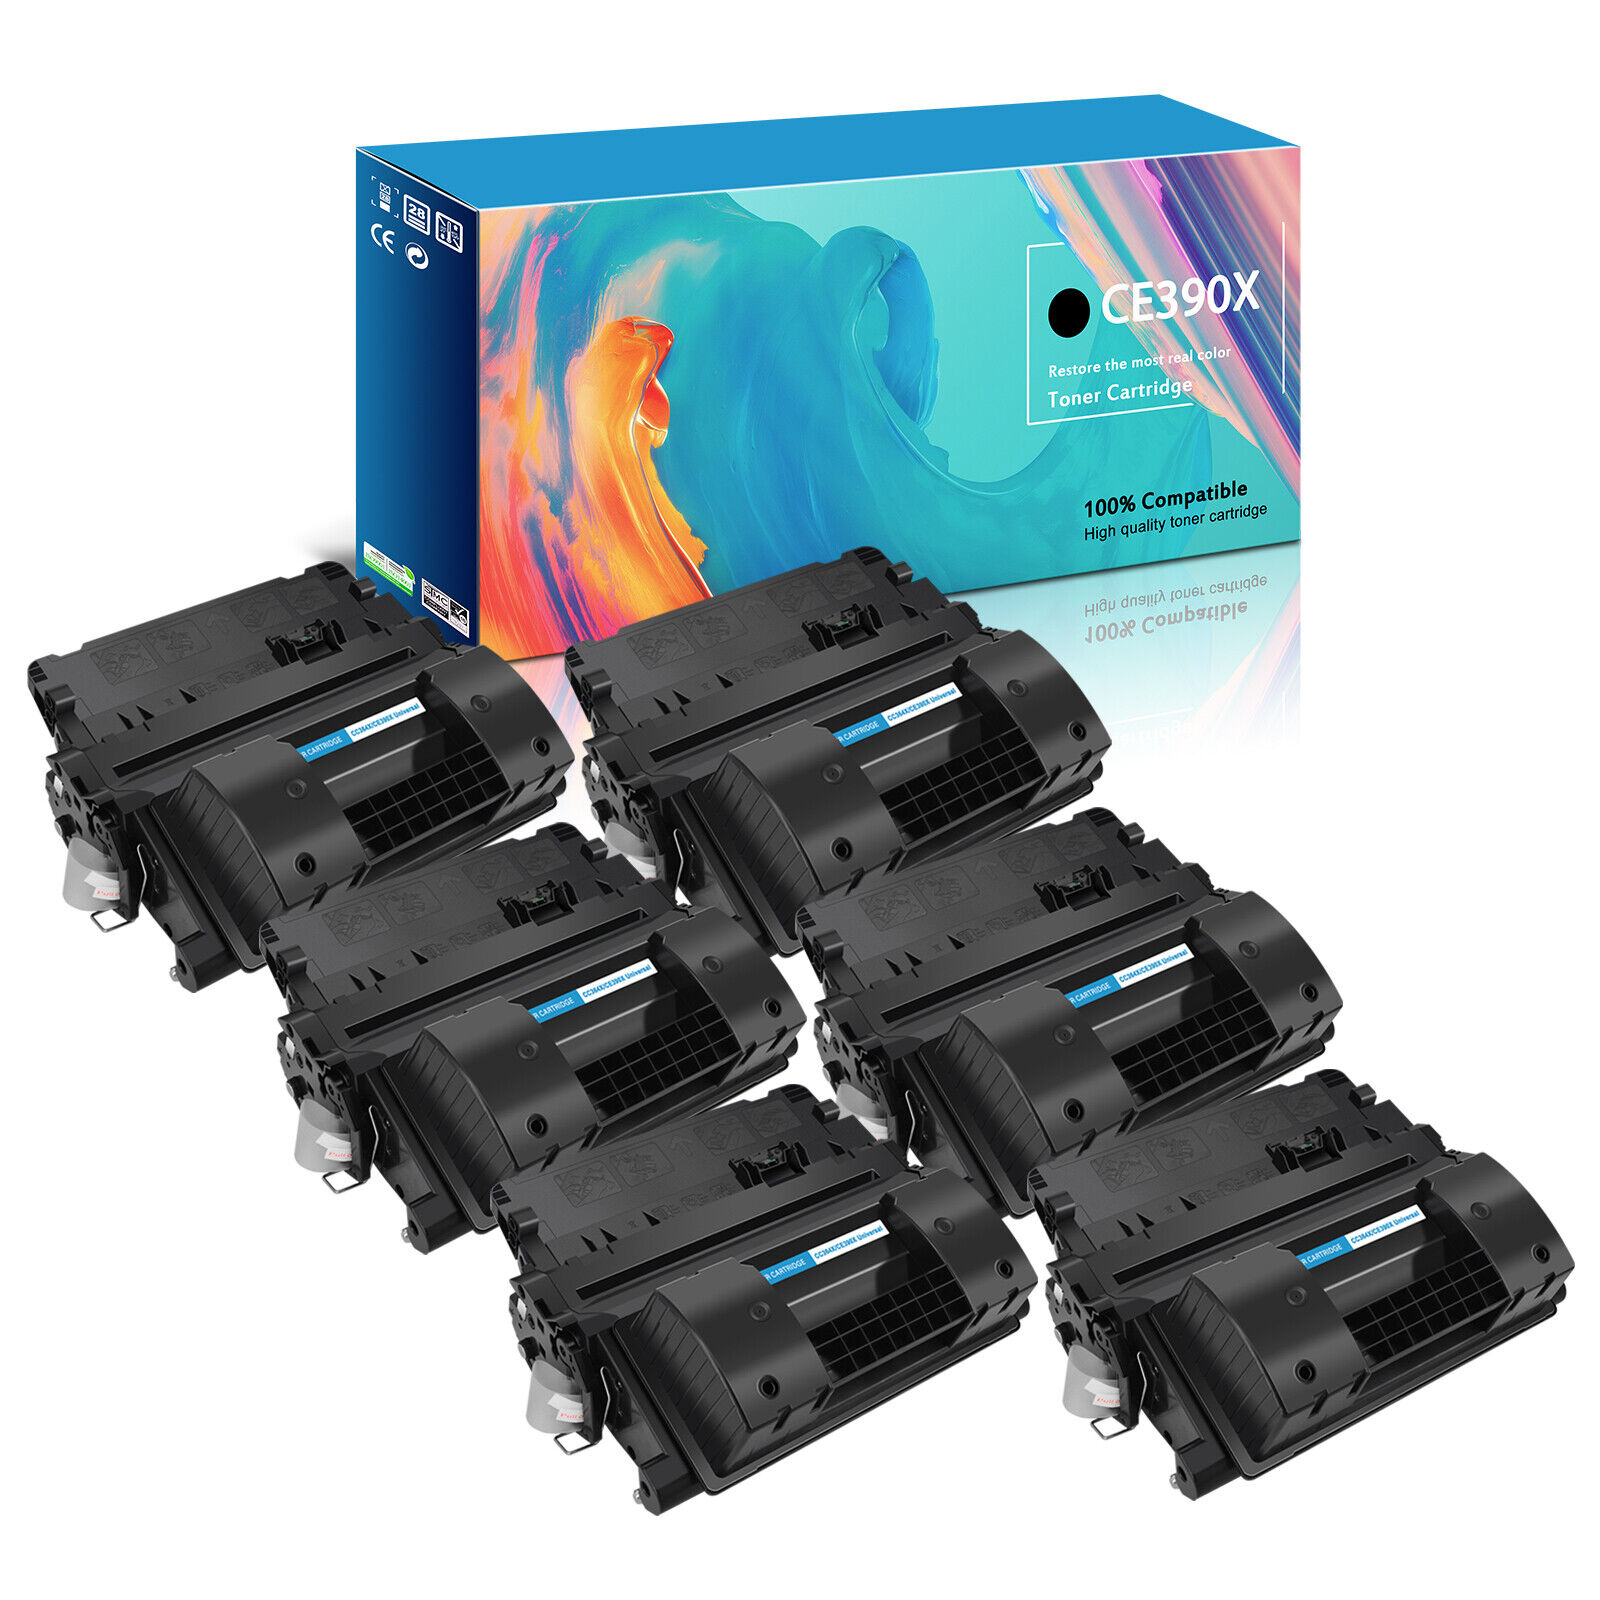 6PK BK Toner for HP CE390X 90X LaserJet Enterprise 600 M601 M601n M601dn Printer